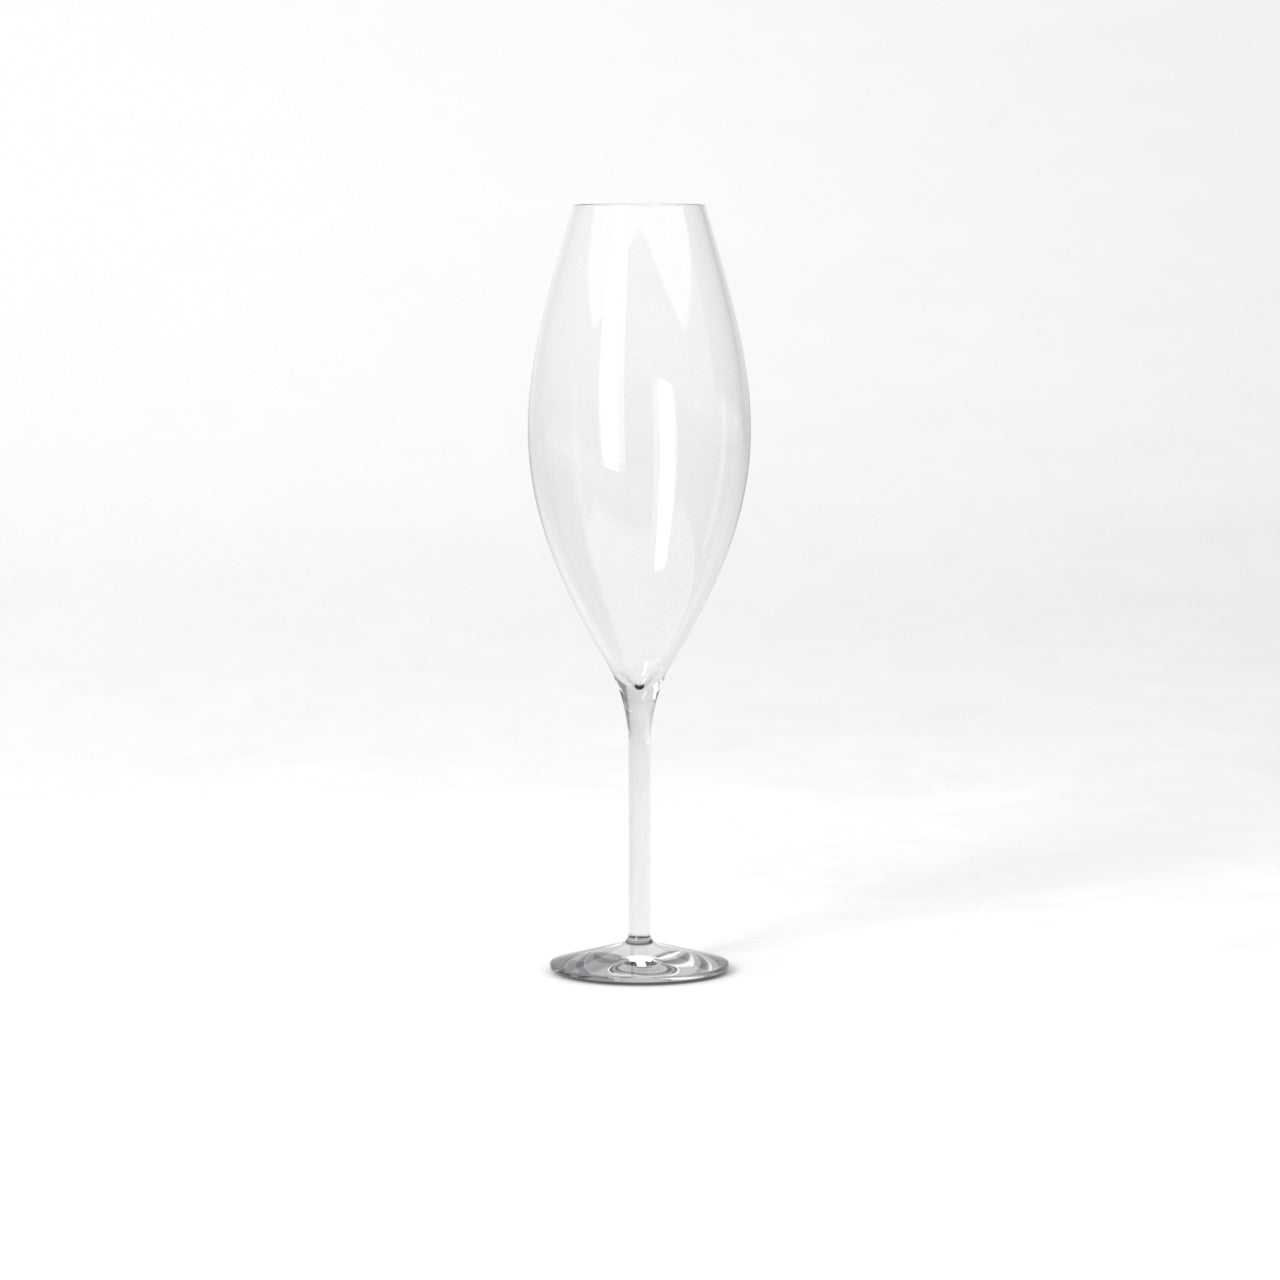 Richard Juhlin champagne glass